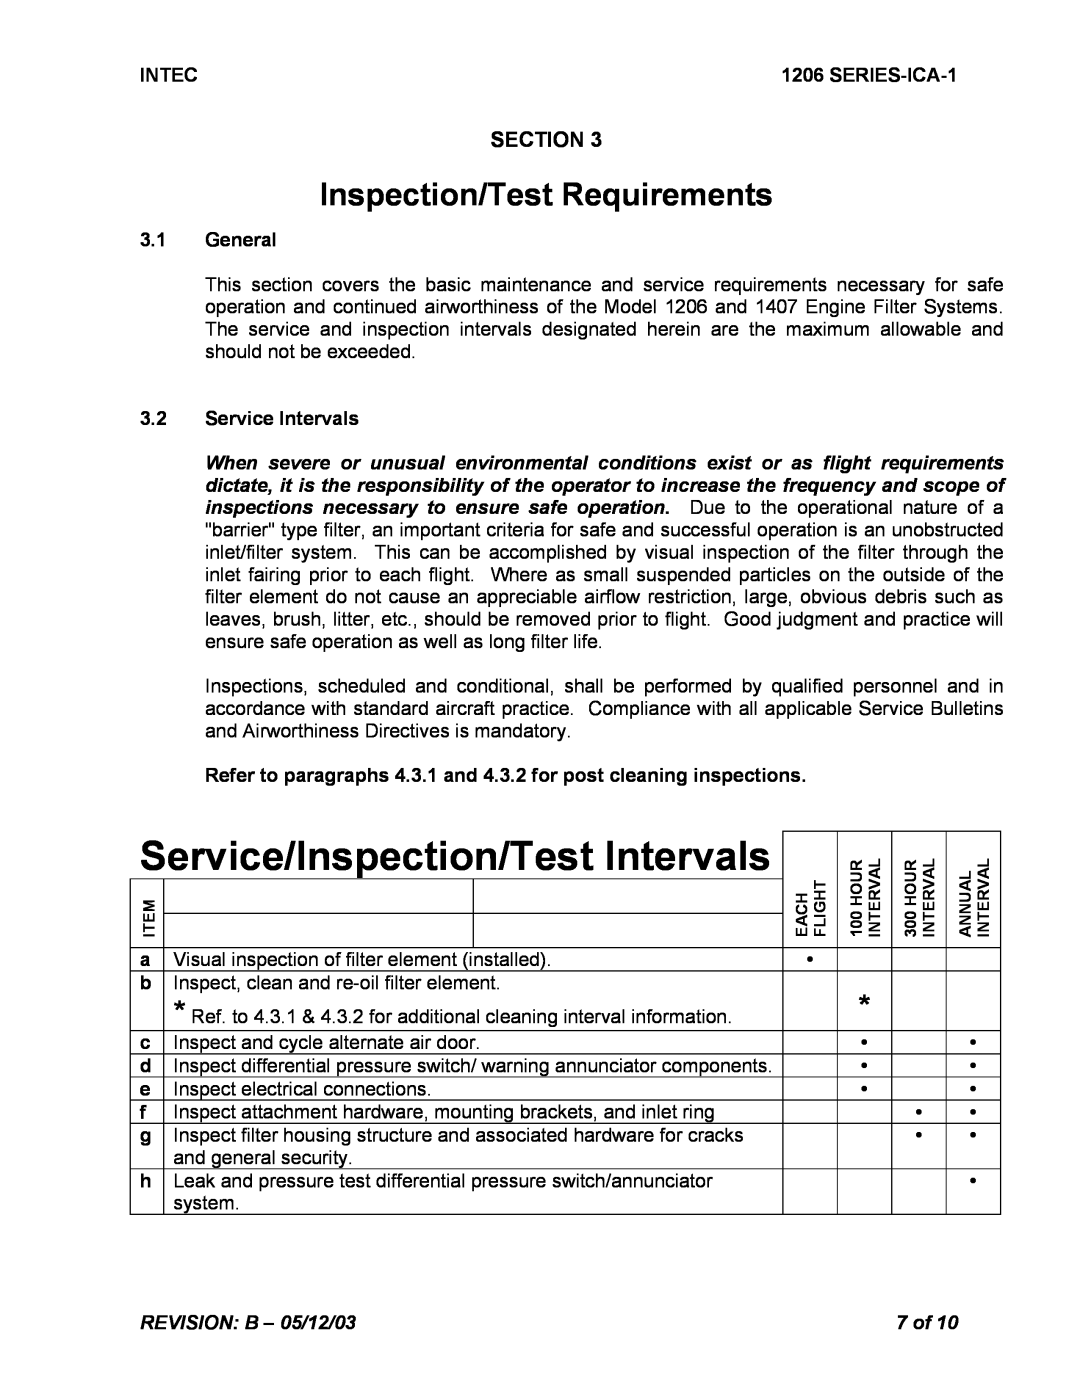 Intec STC SR00180SE manual Inspection/Test Requirements, Service/Inspection/Test Intervals, Section 